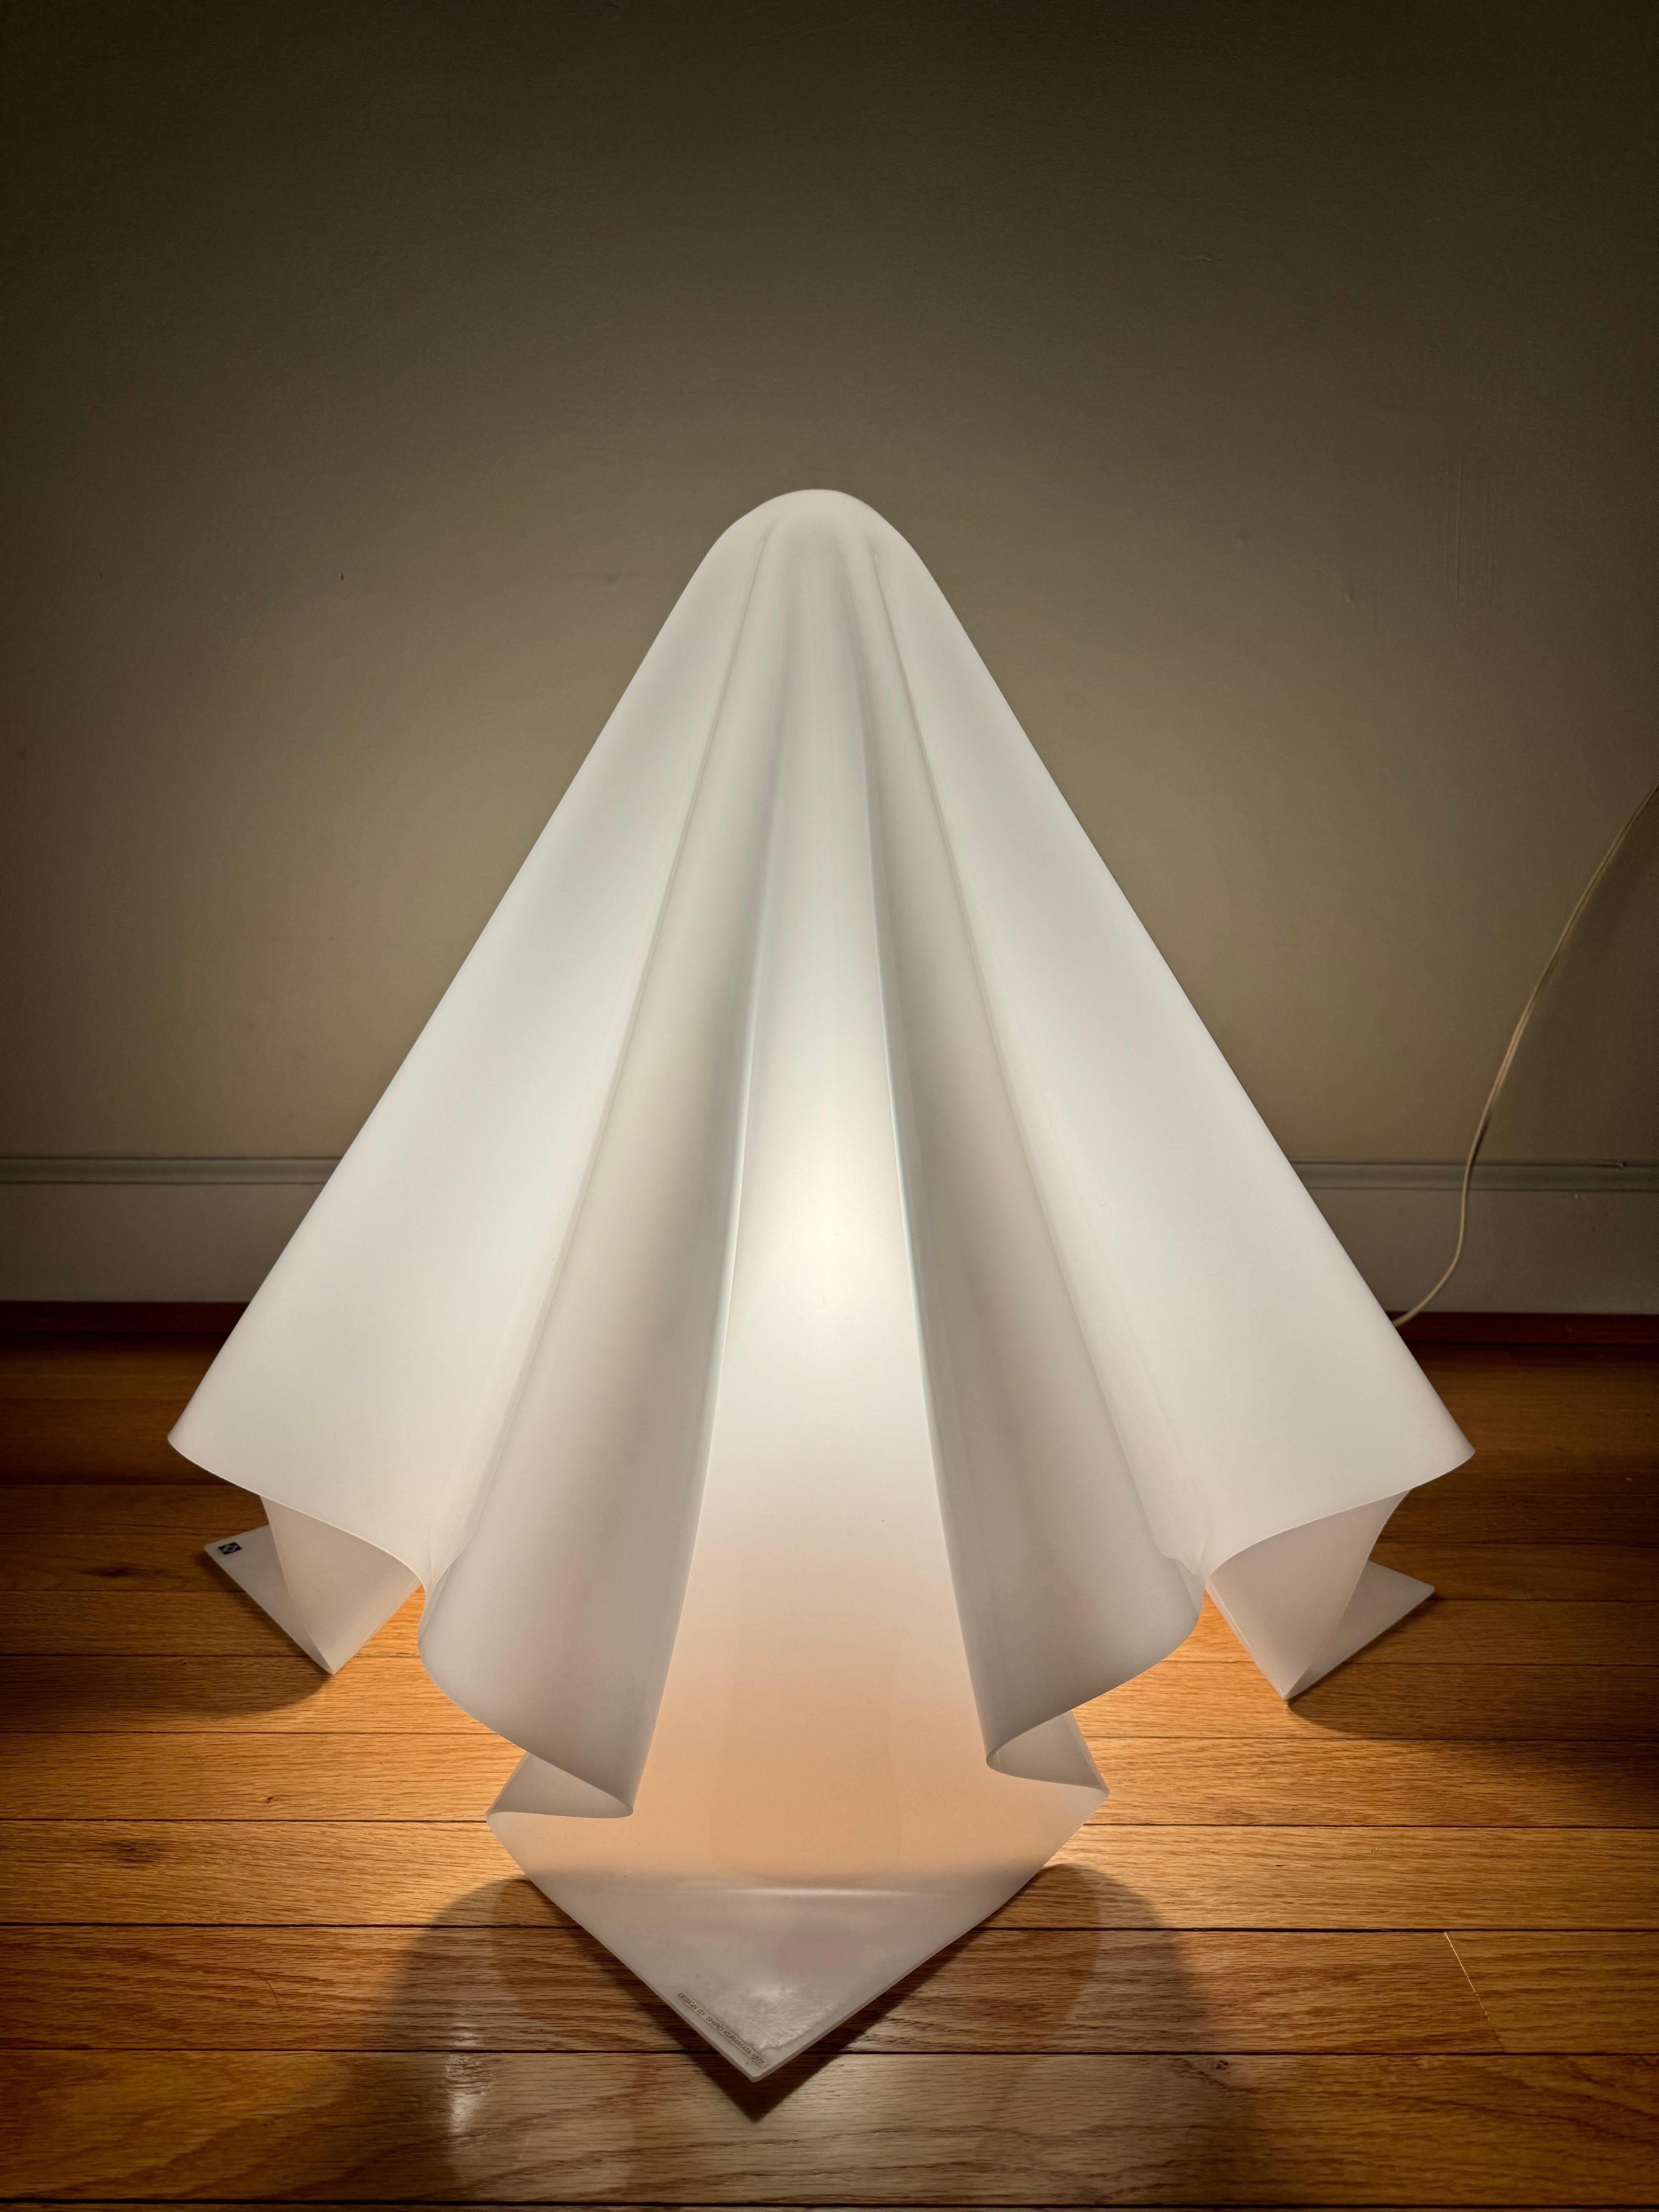 Rare early K-series (Oba- Q/Ghost) table lamp by Shiro Kuramata (Large) 2